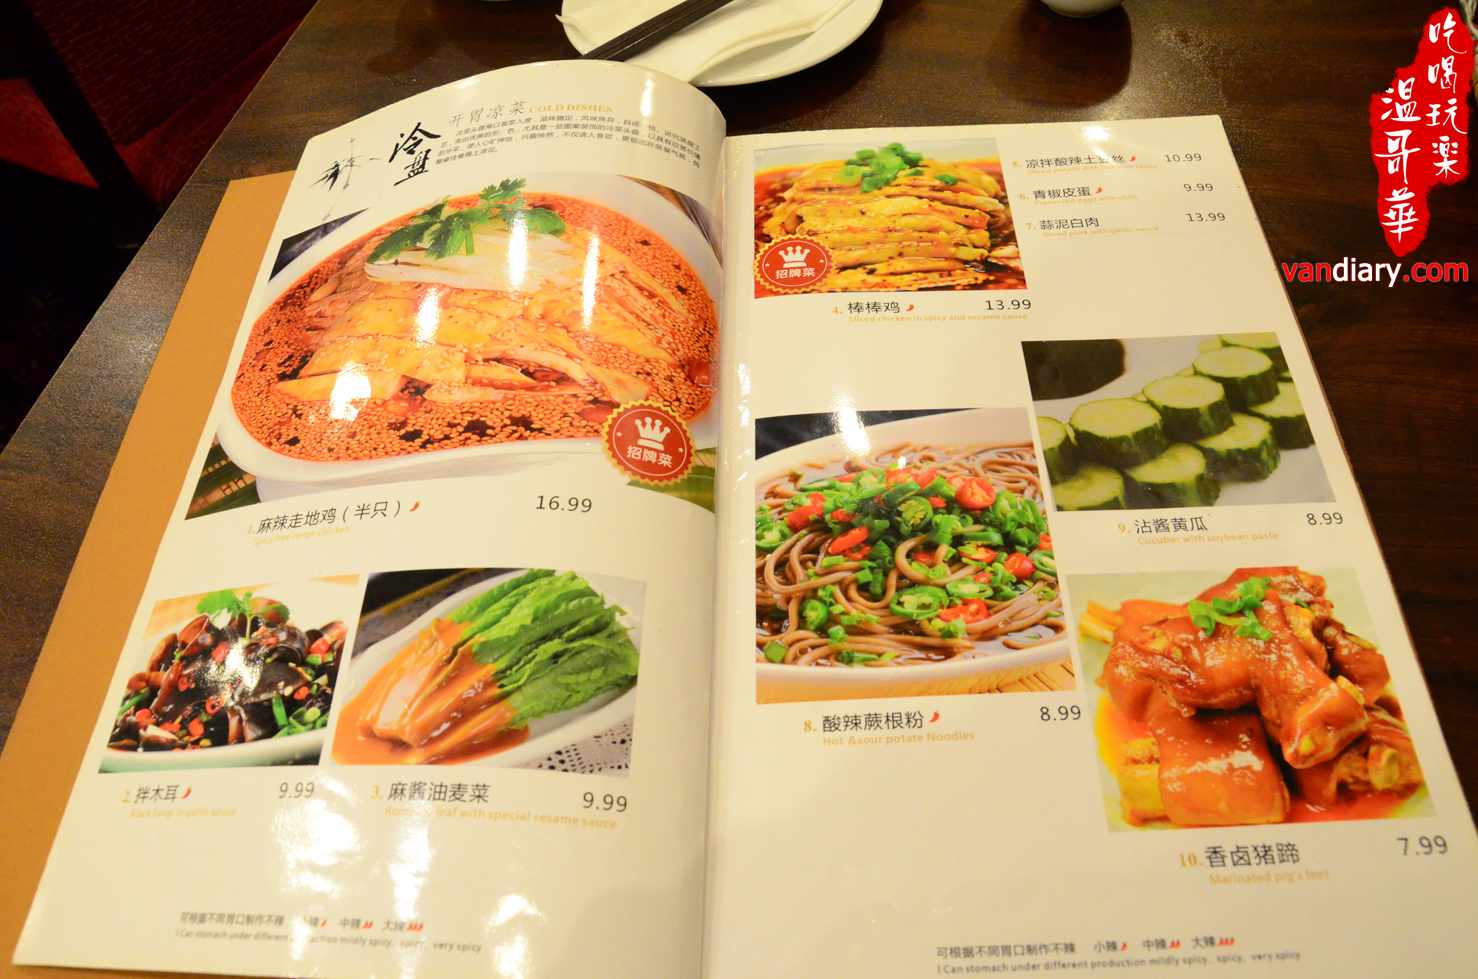 New Spicy Chili Restaurant 小四川 - Number 3 Road